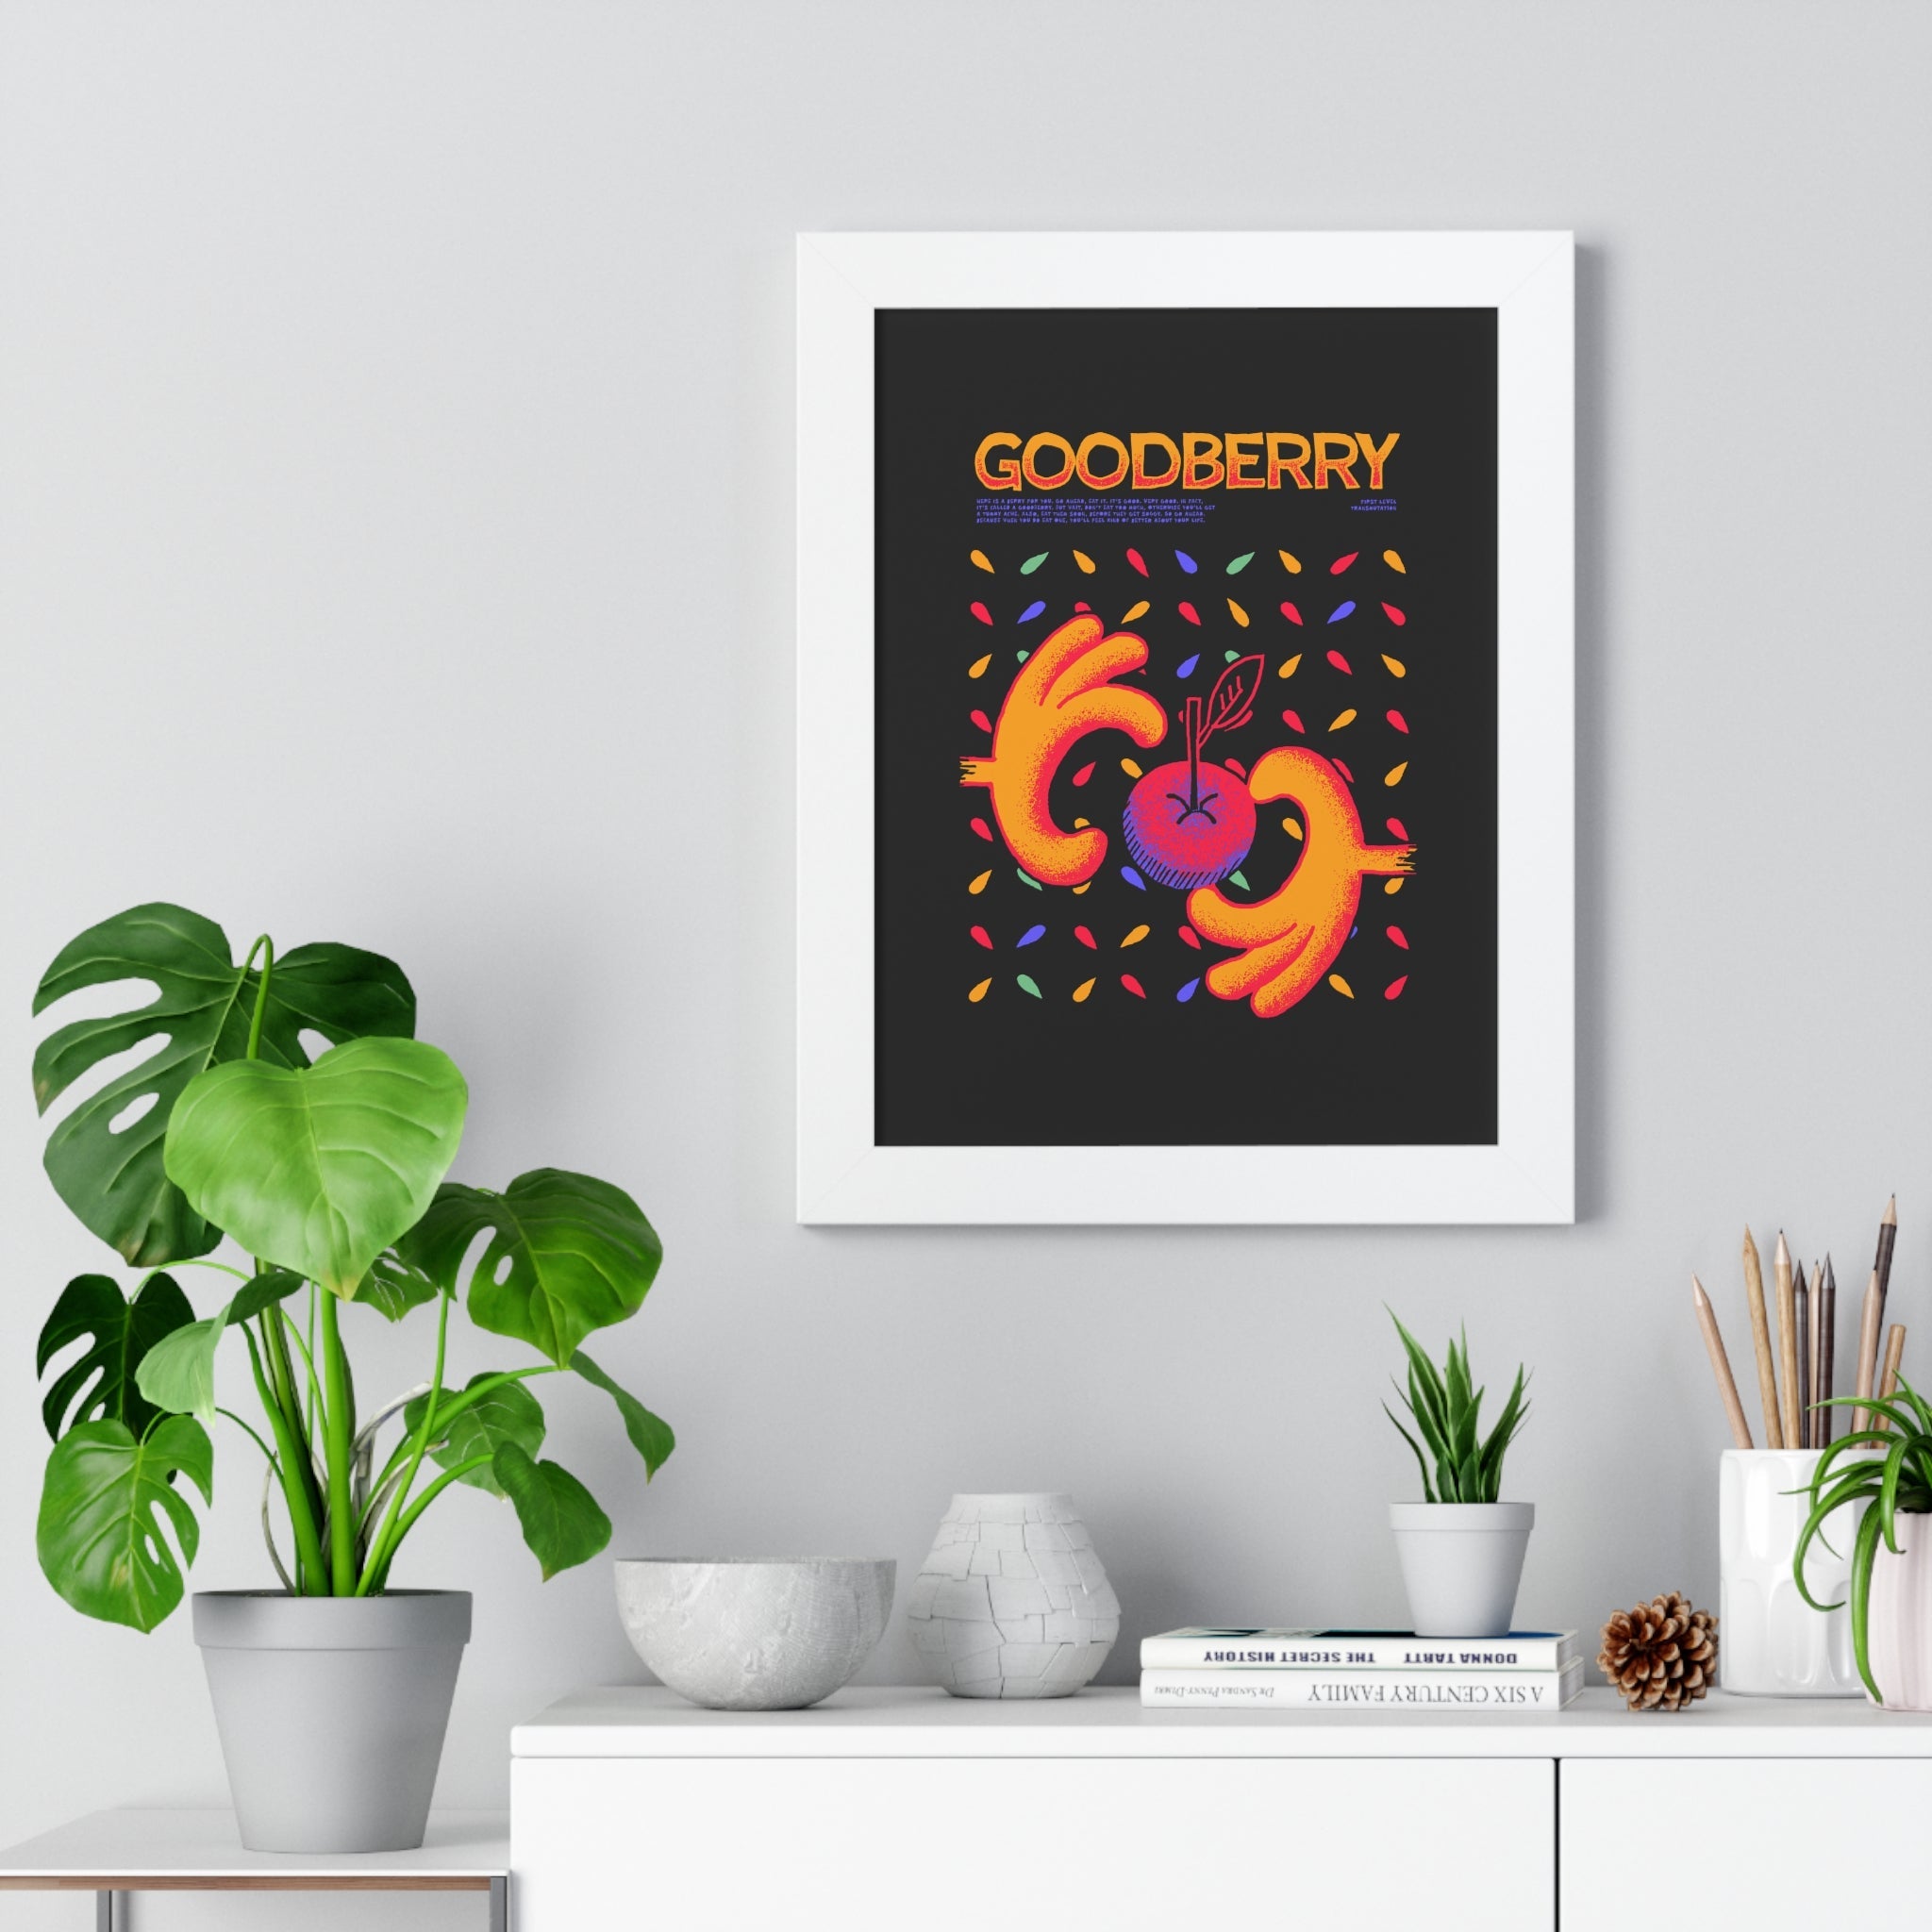 Goodberry | Framed Poster - Framed Poster - Ace of Gnomes - 13340923728198945206